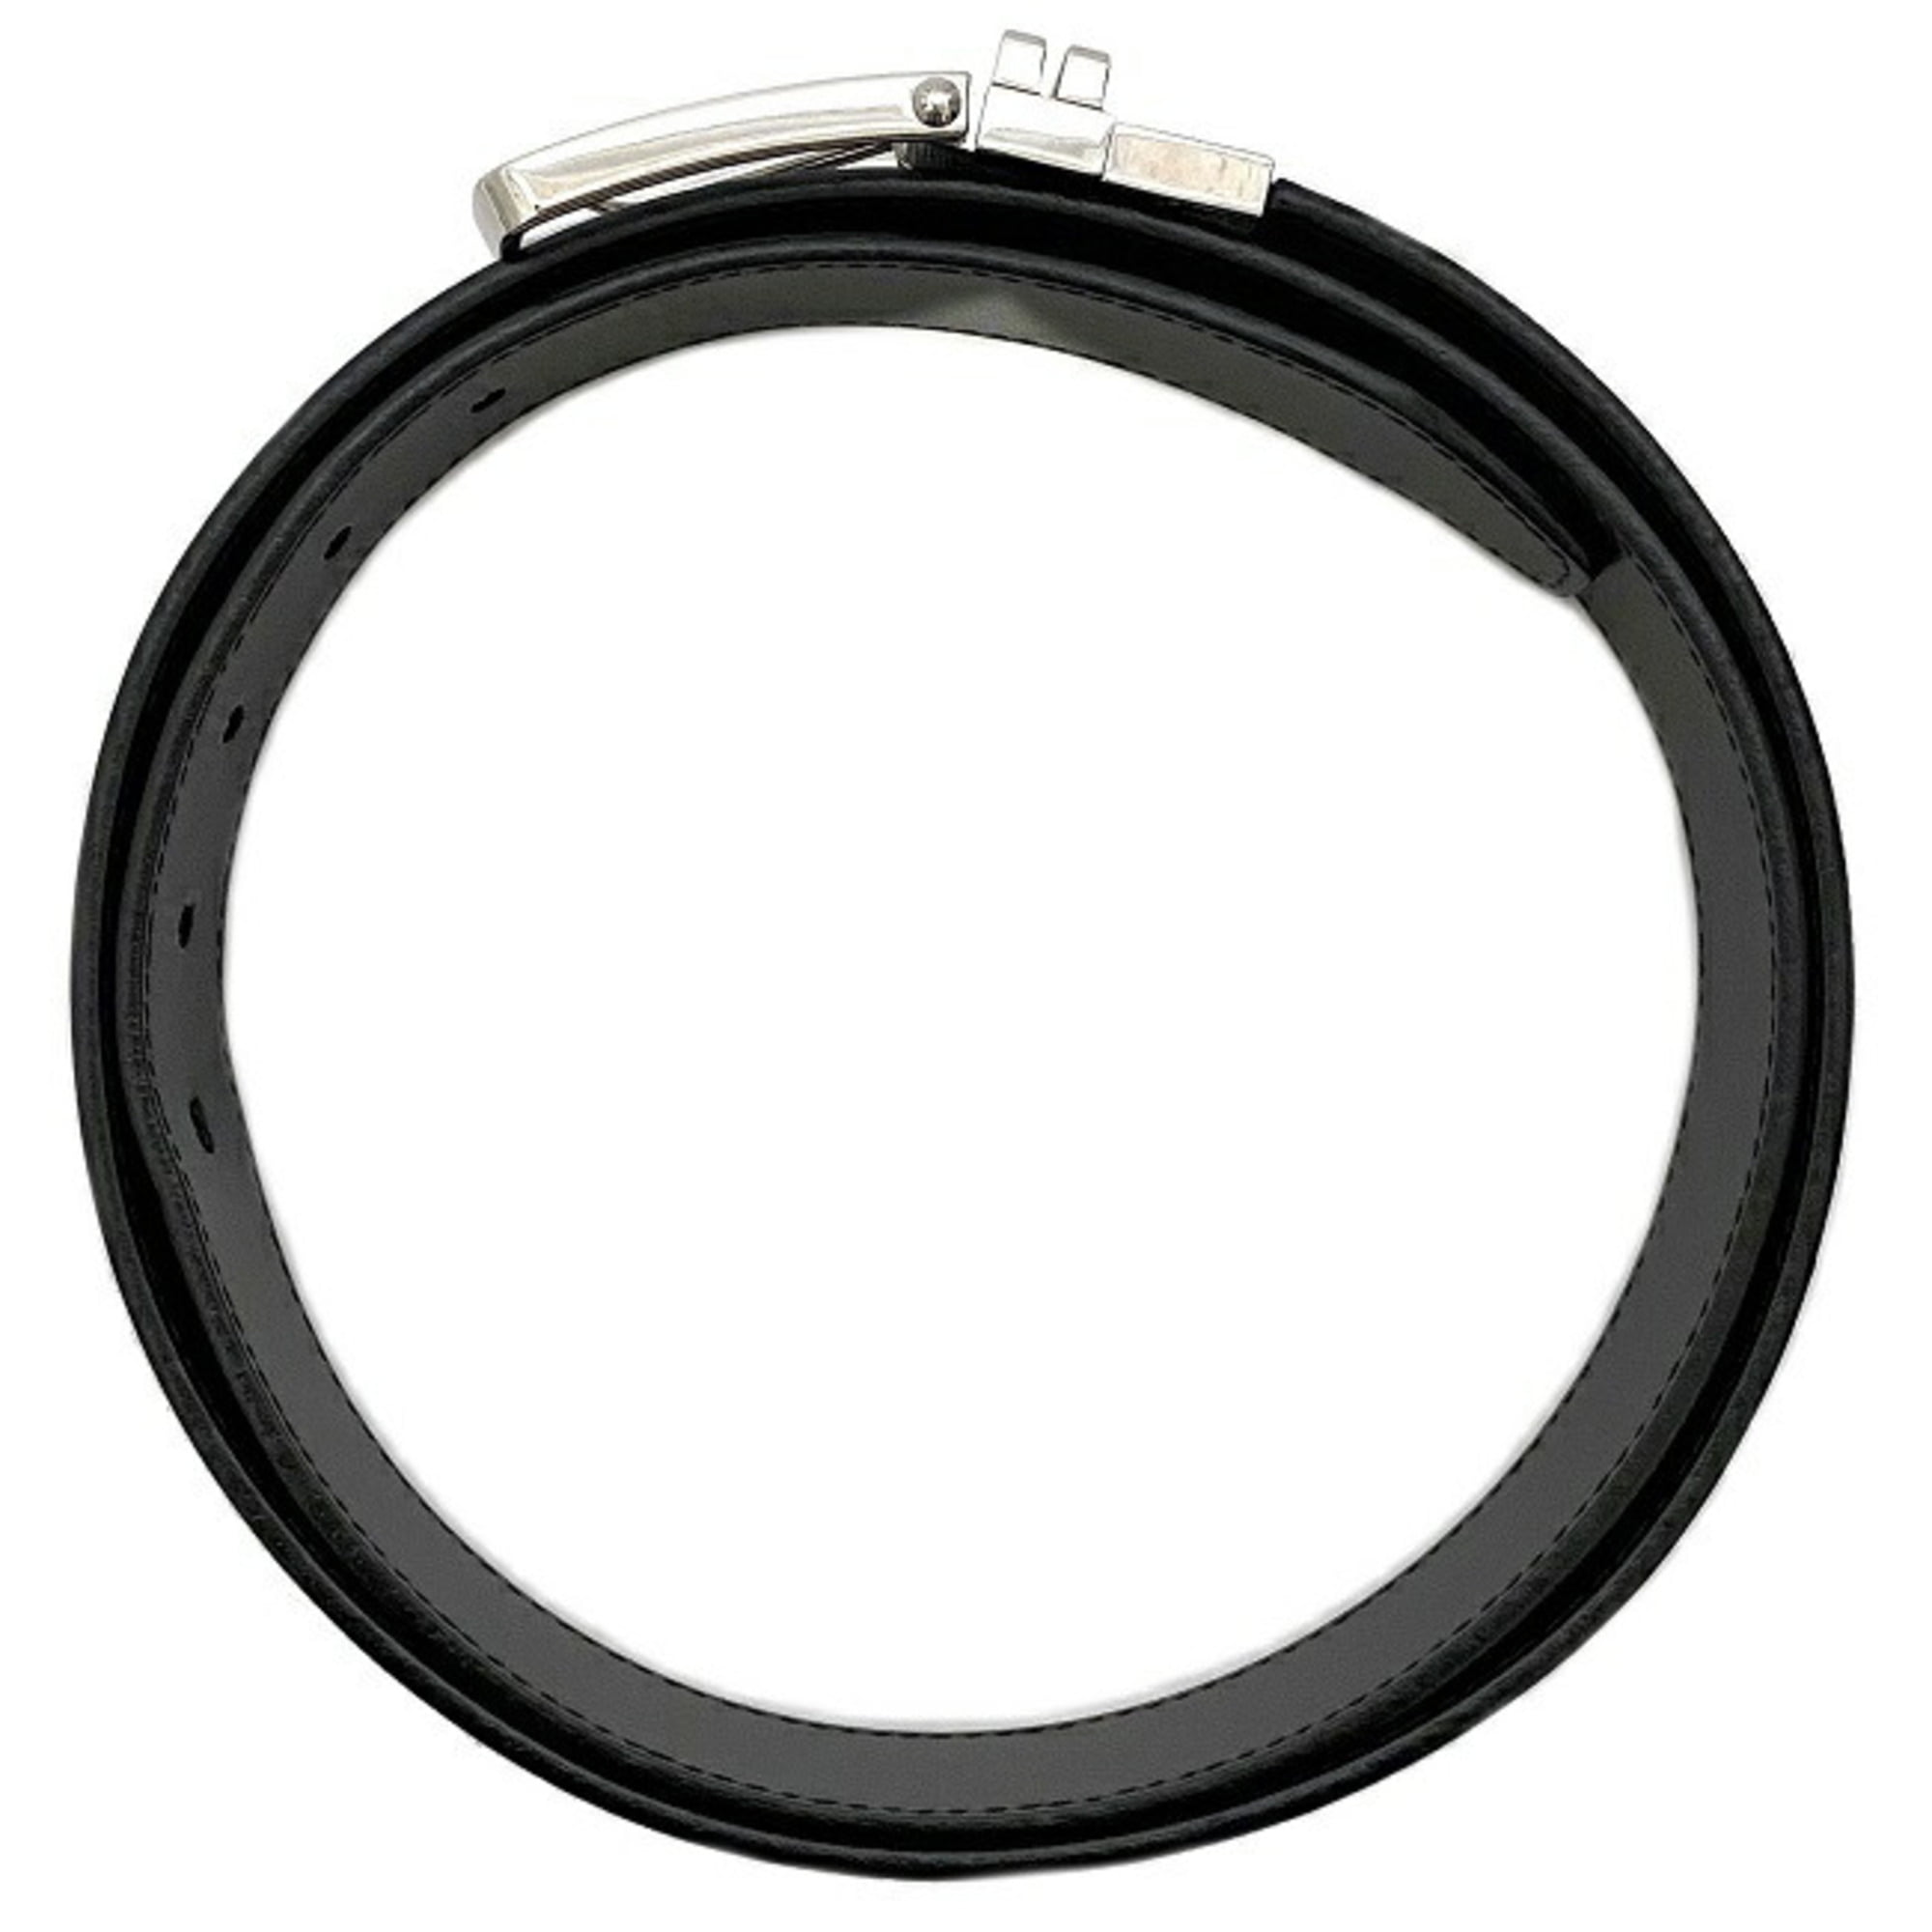 Used] LOUIS VUITTON Saint Tulle Perfo Belt Leather Black 100 M6931